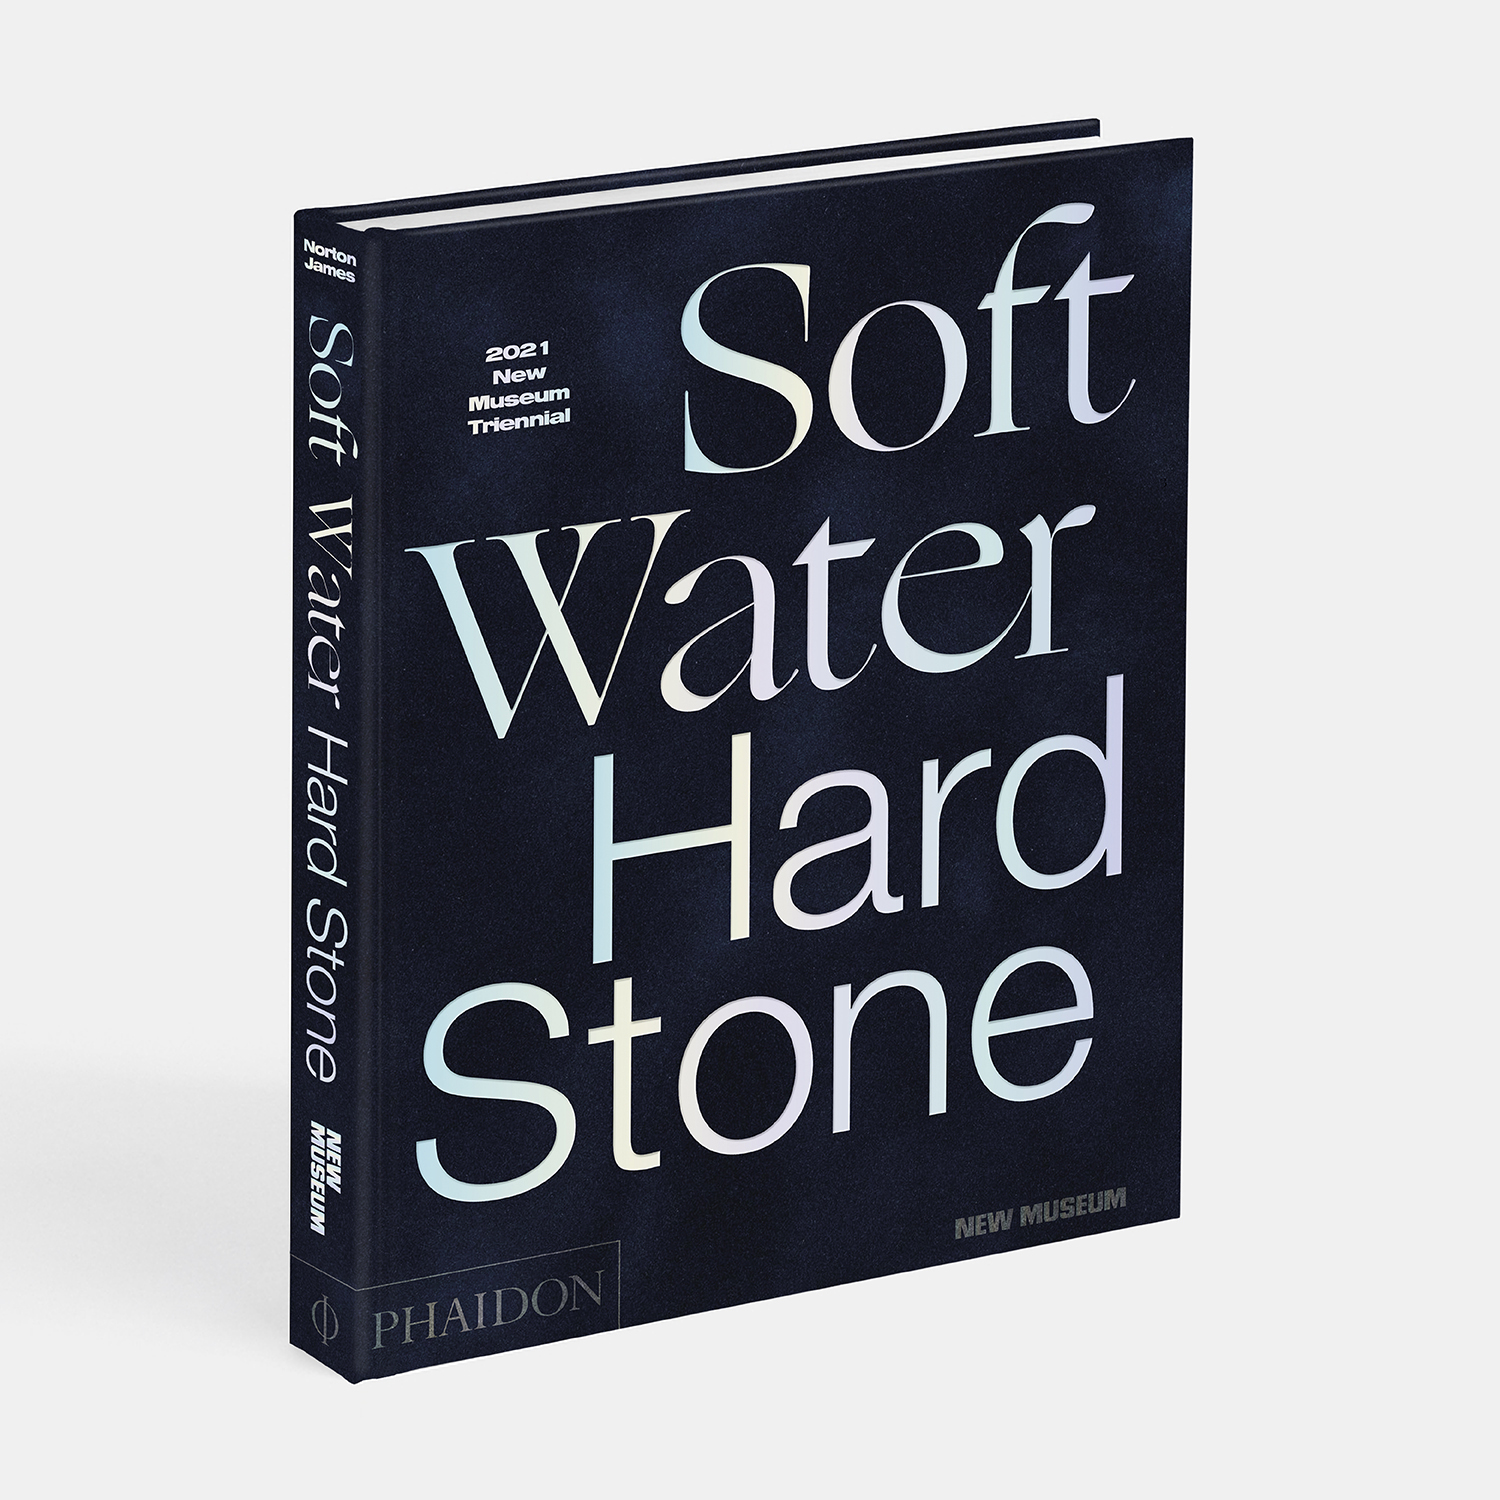 Soft Water Hard Stone